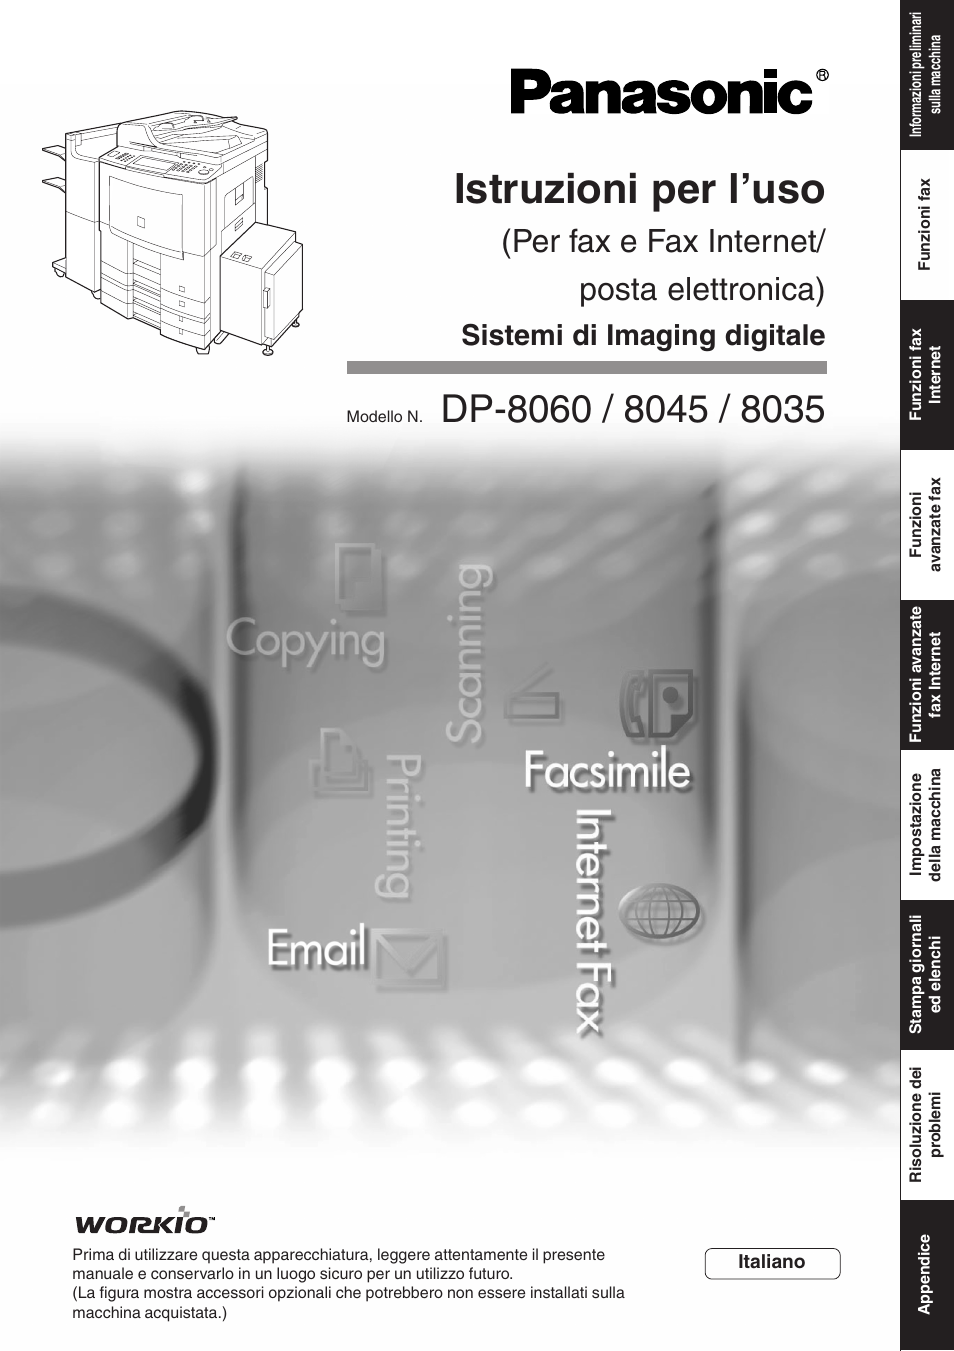 Panasonic DP8035 Manuale d'uso | Pagine: 196